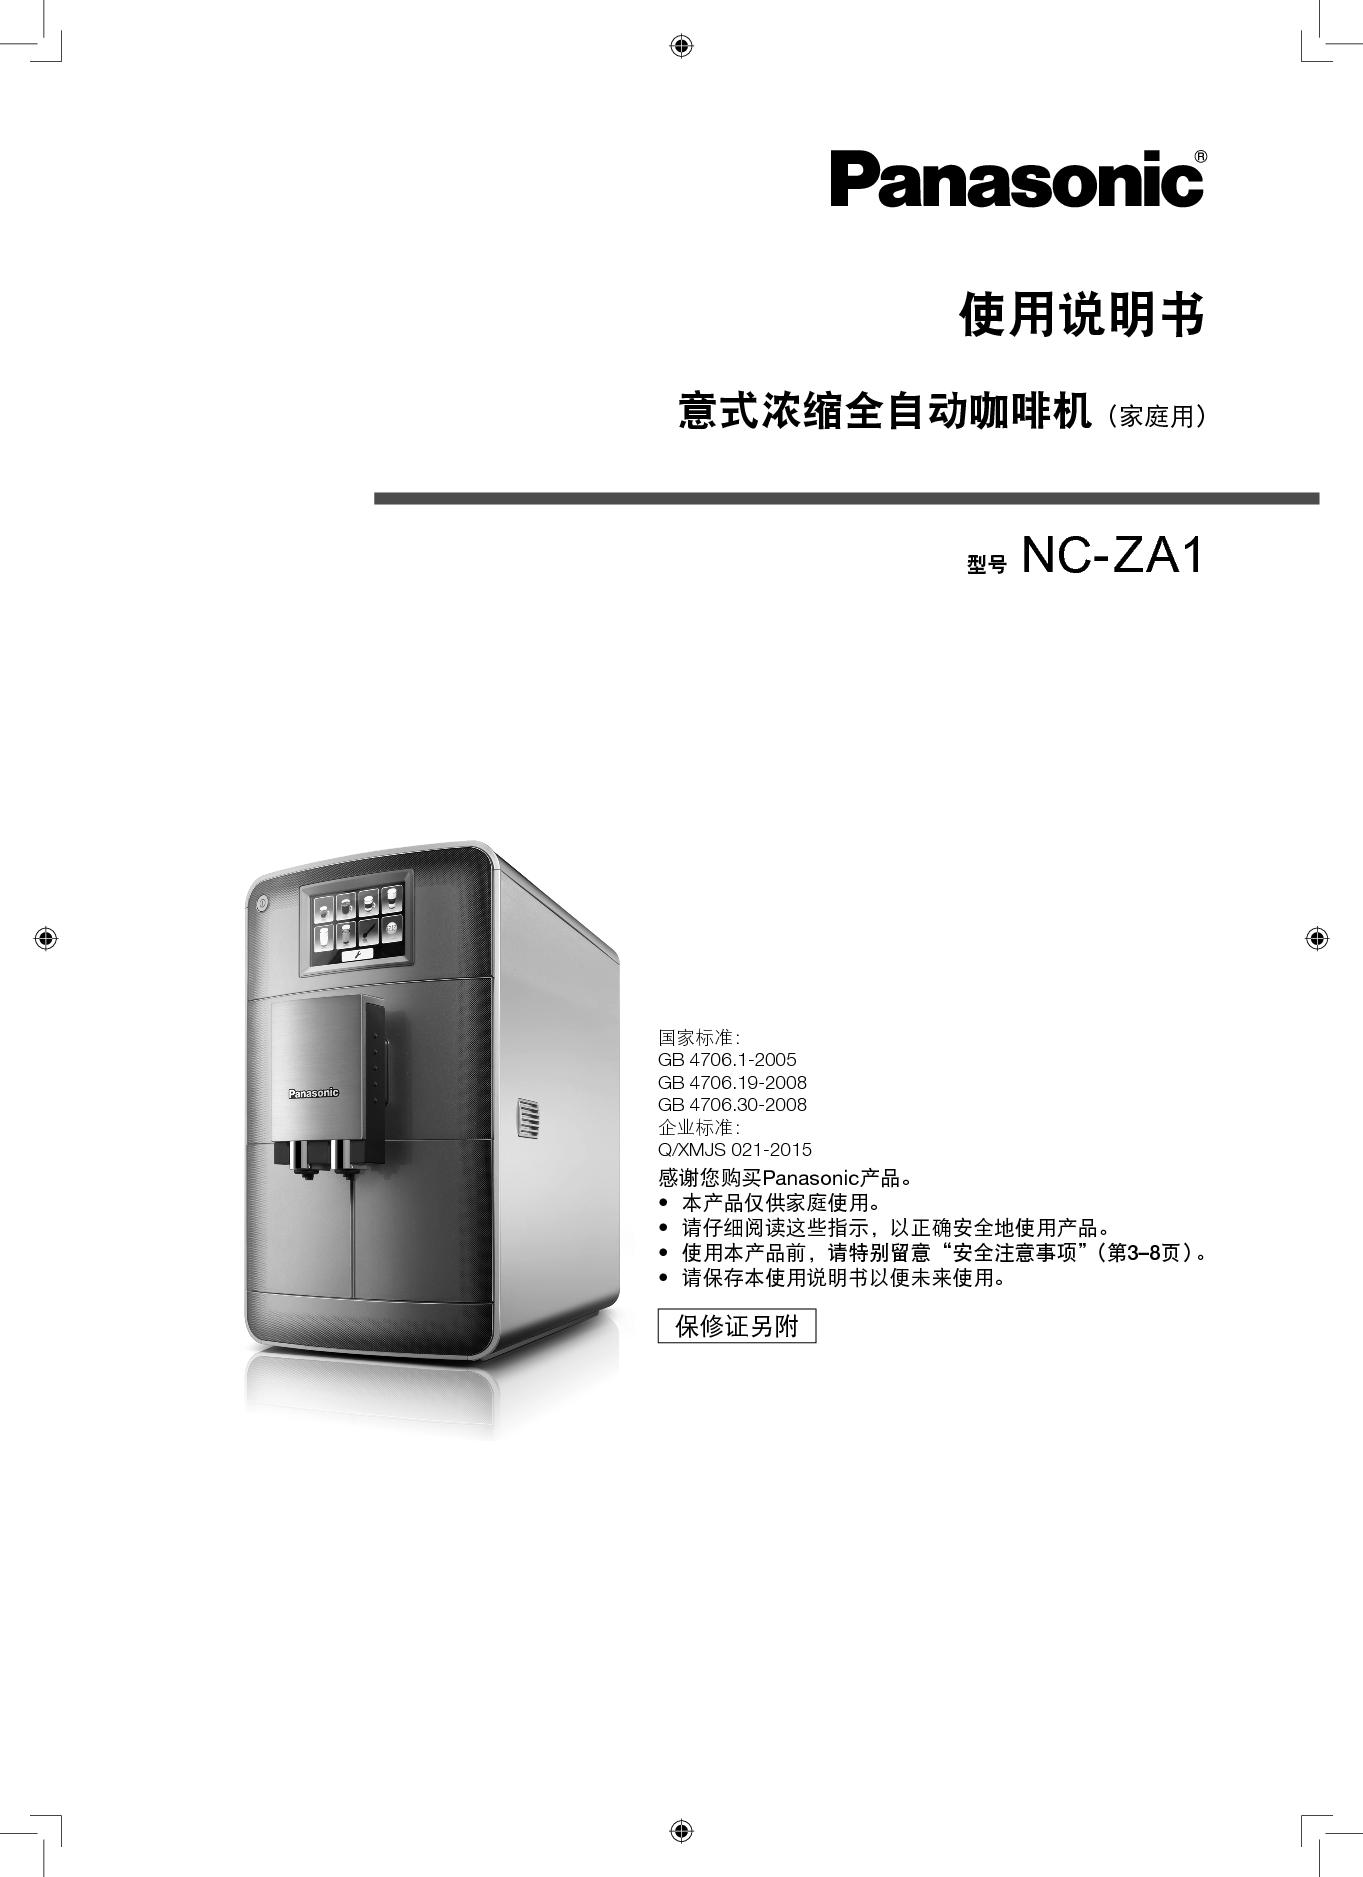 松下 Panasonic NC-ZA1 使用说明书 封面